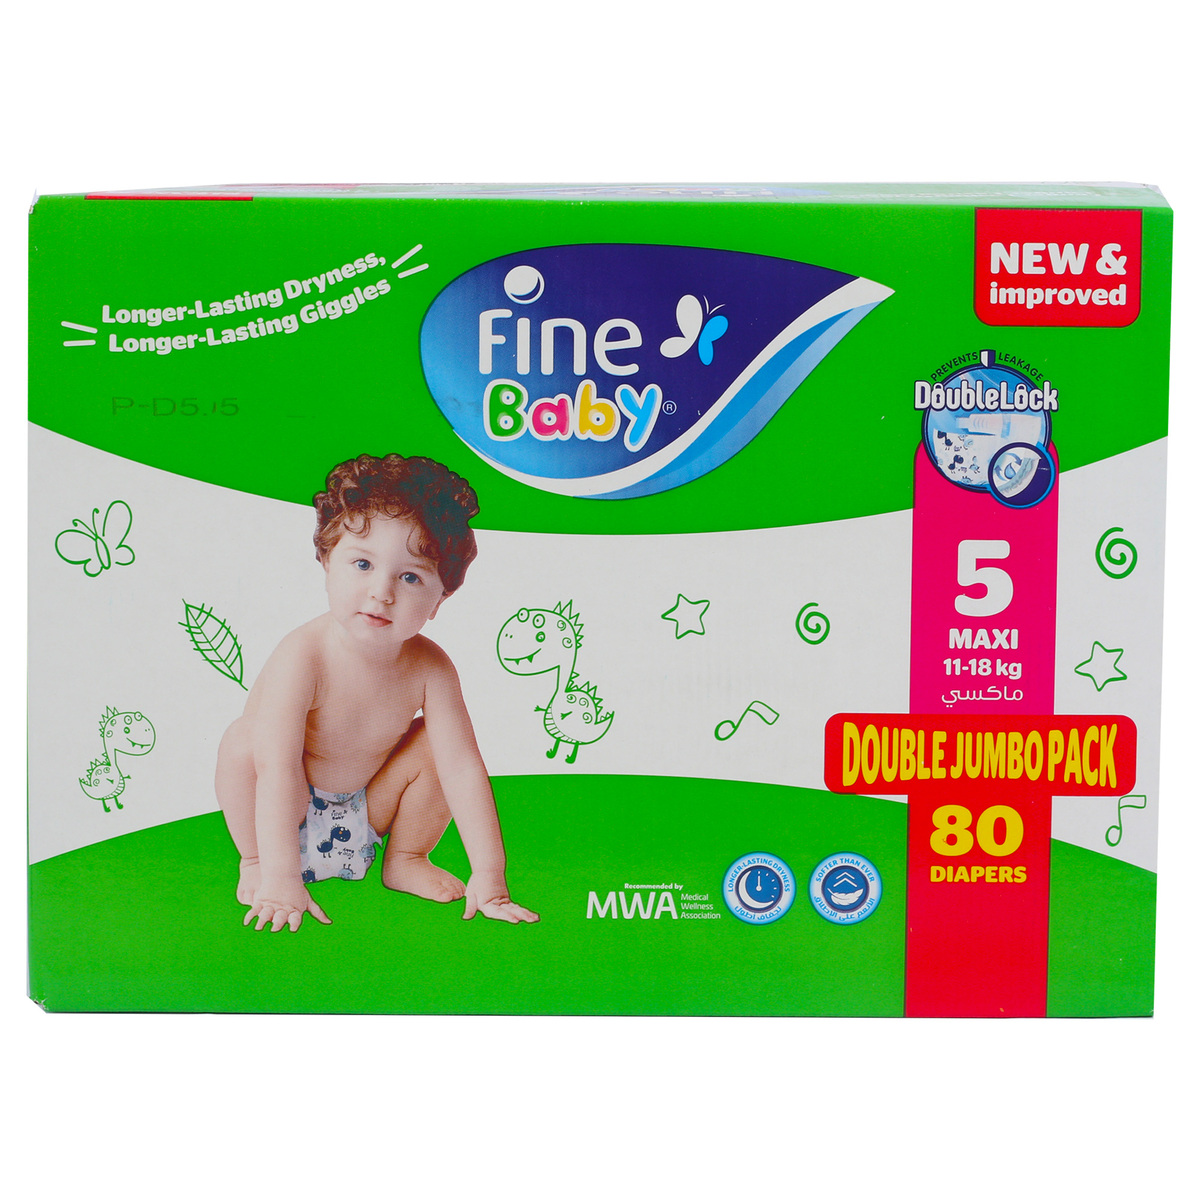 Fine Baby Diaper Double Jumbo Pack Maxi Size 5 11-18 kg Value Pack 80 pcs